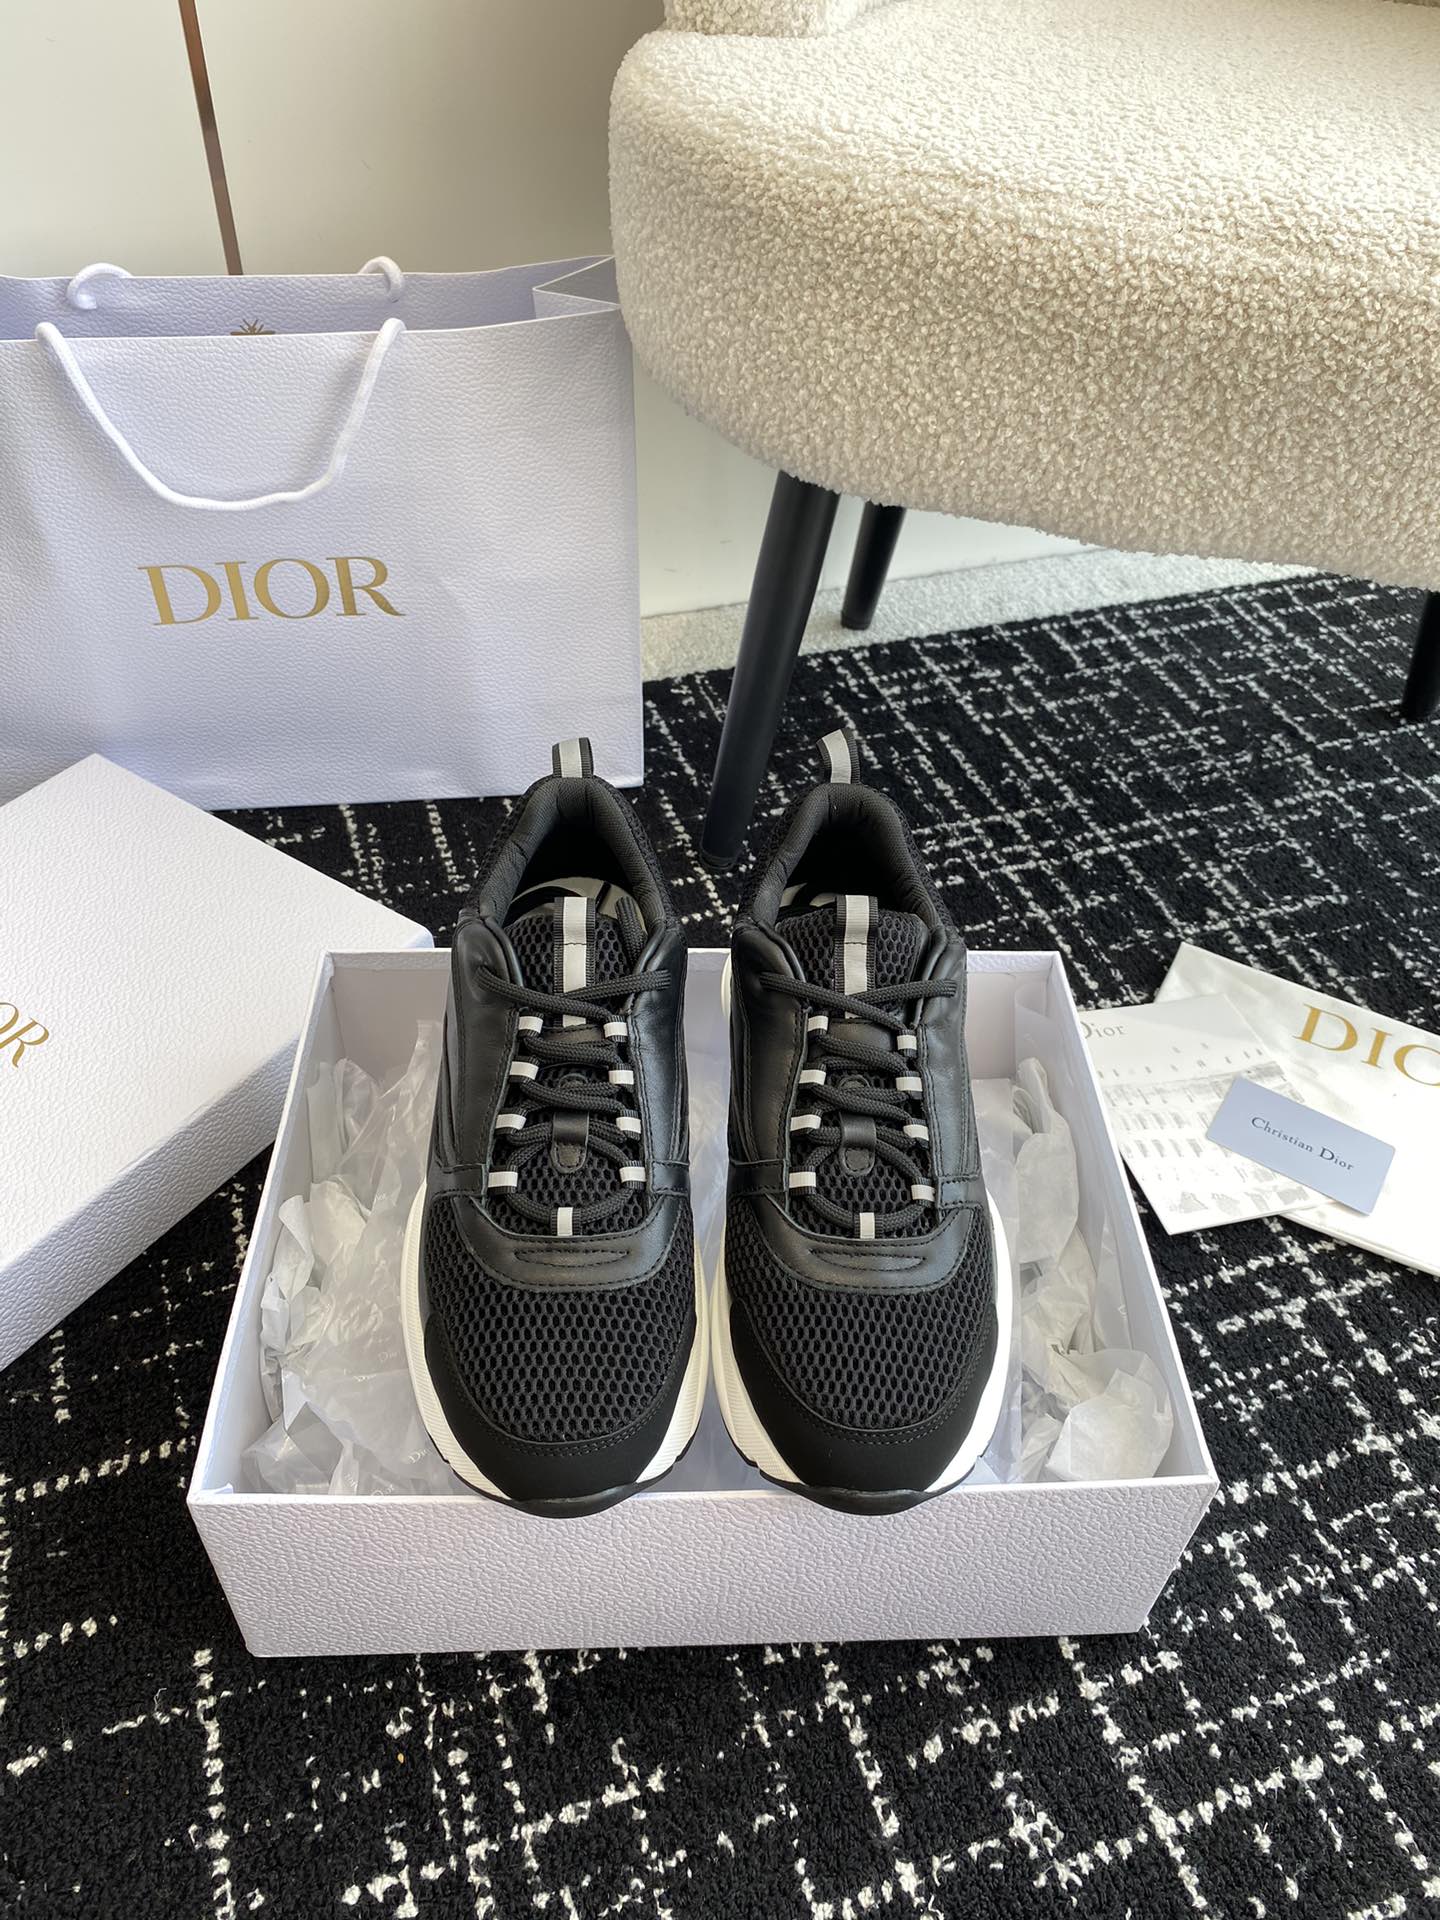 Dior Shoes Sneakers Splicing Unisex Women Men Rubber Fashion Casual